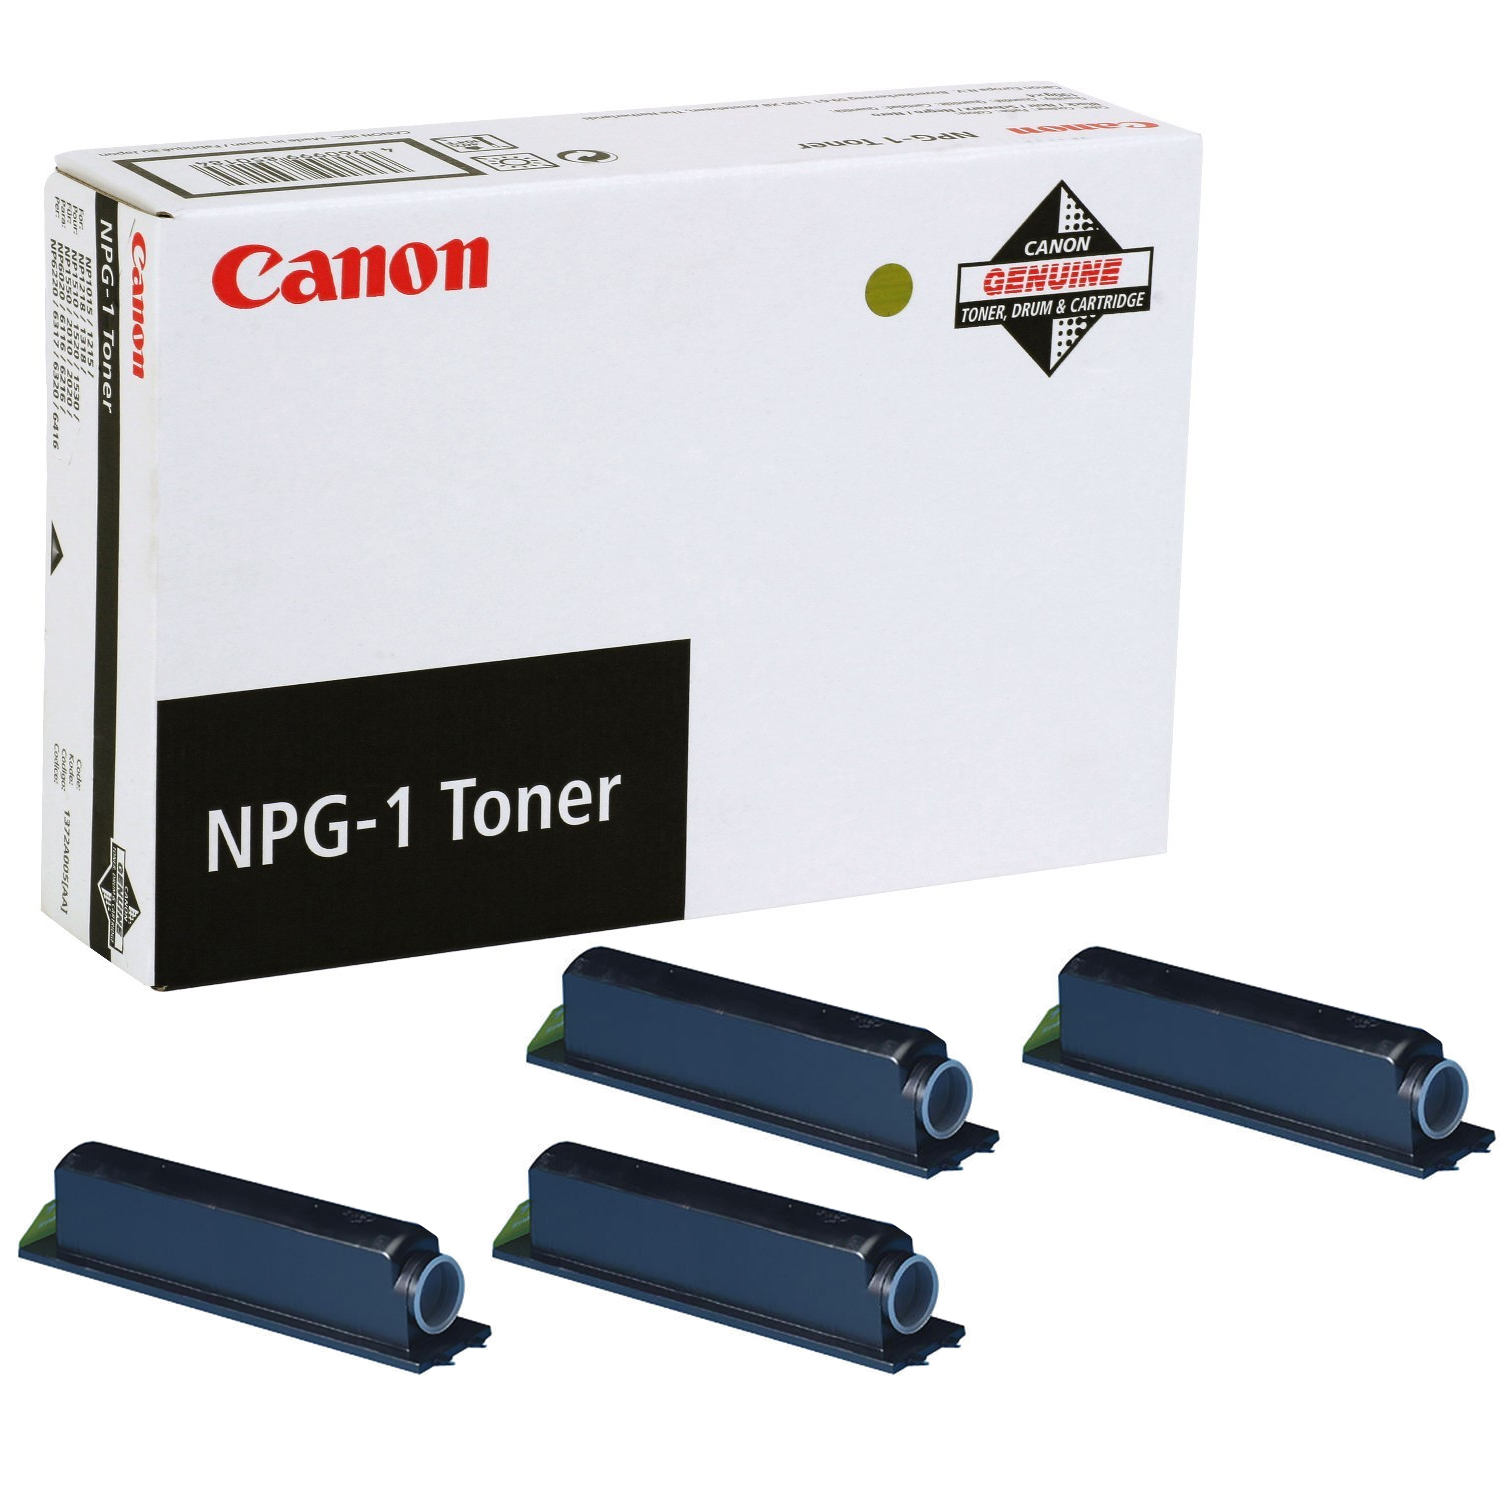 Original Canon NPG-1 Black 4 Pack Toner Cartridges (1372A005AA)